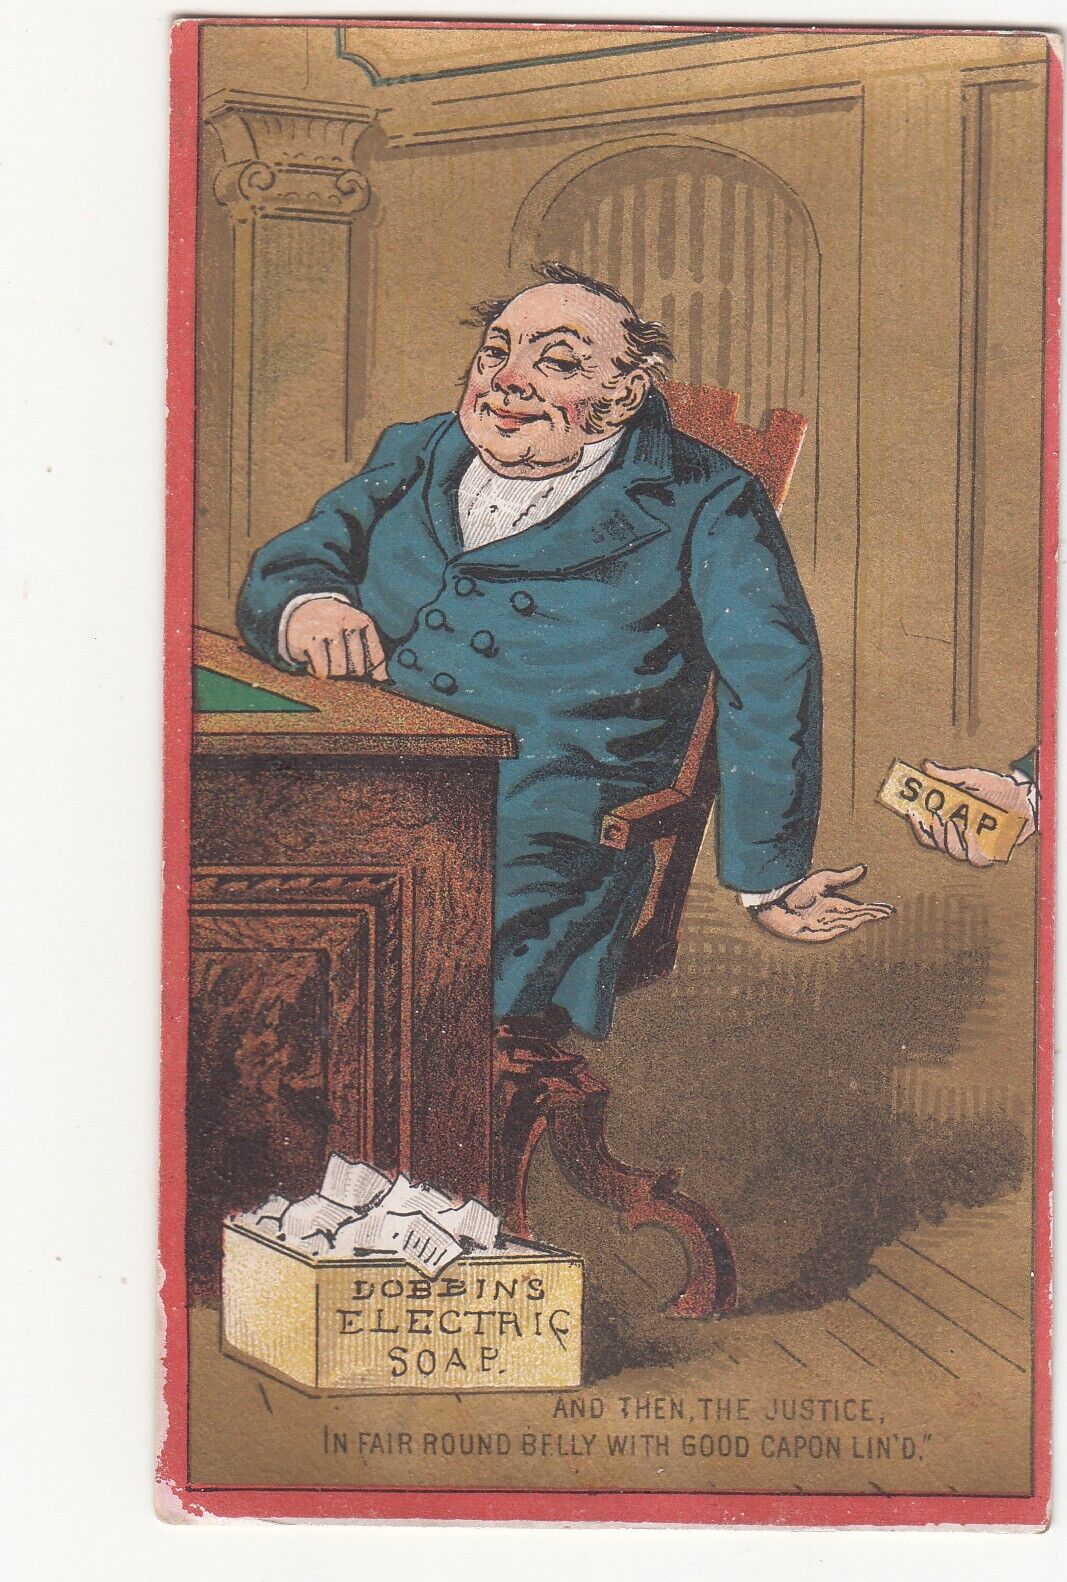 Dobbins Electric Soap Judge at Bench I L Cragin & Co Philadelphia Card c1880s